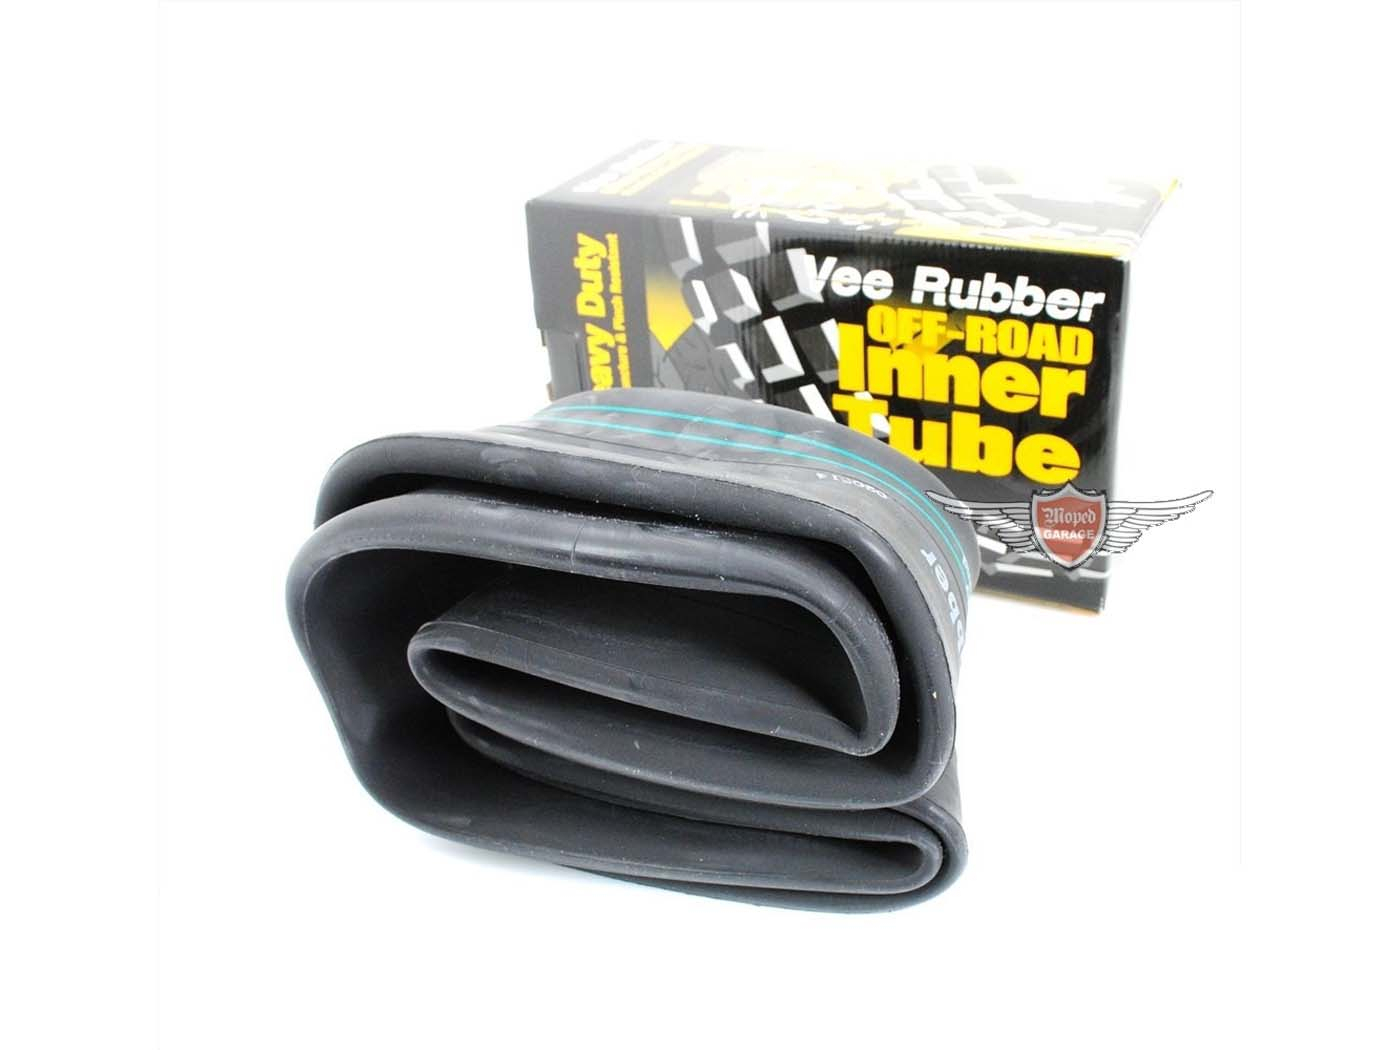 Inner Tube Vee Rubber Enduro HD 4.10 X 18 Inch For Suzuki TS Yamaha DT 50 80